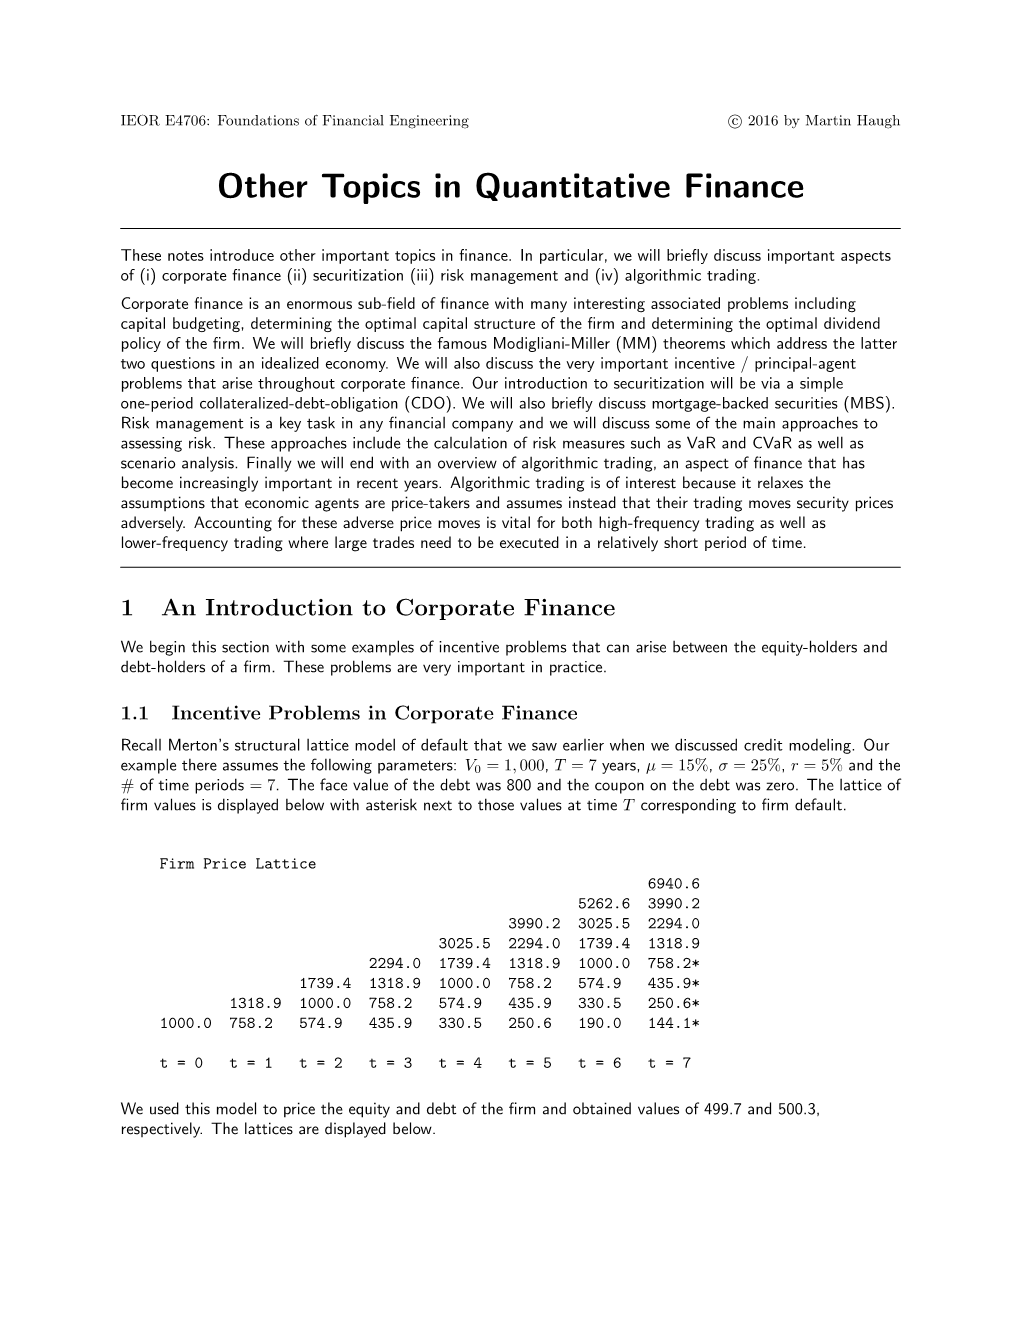 Other Topics in Quantitative Finance